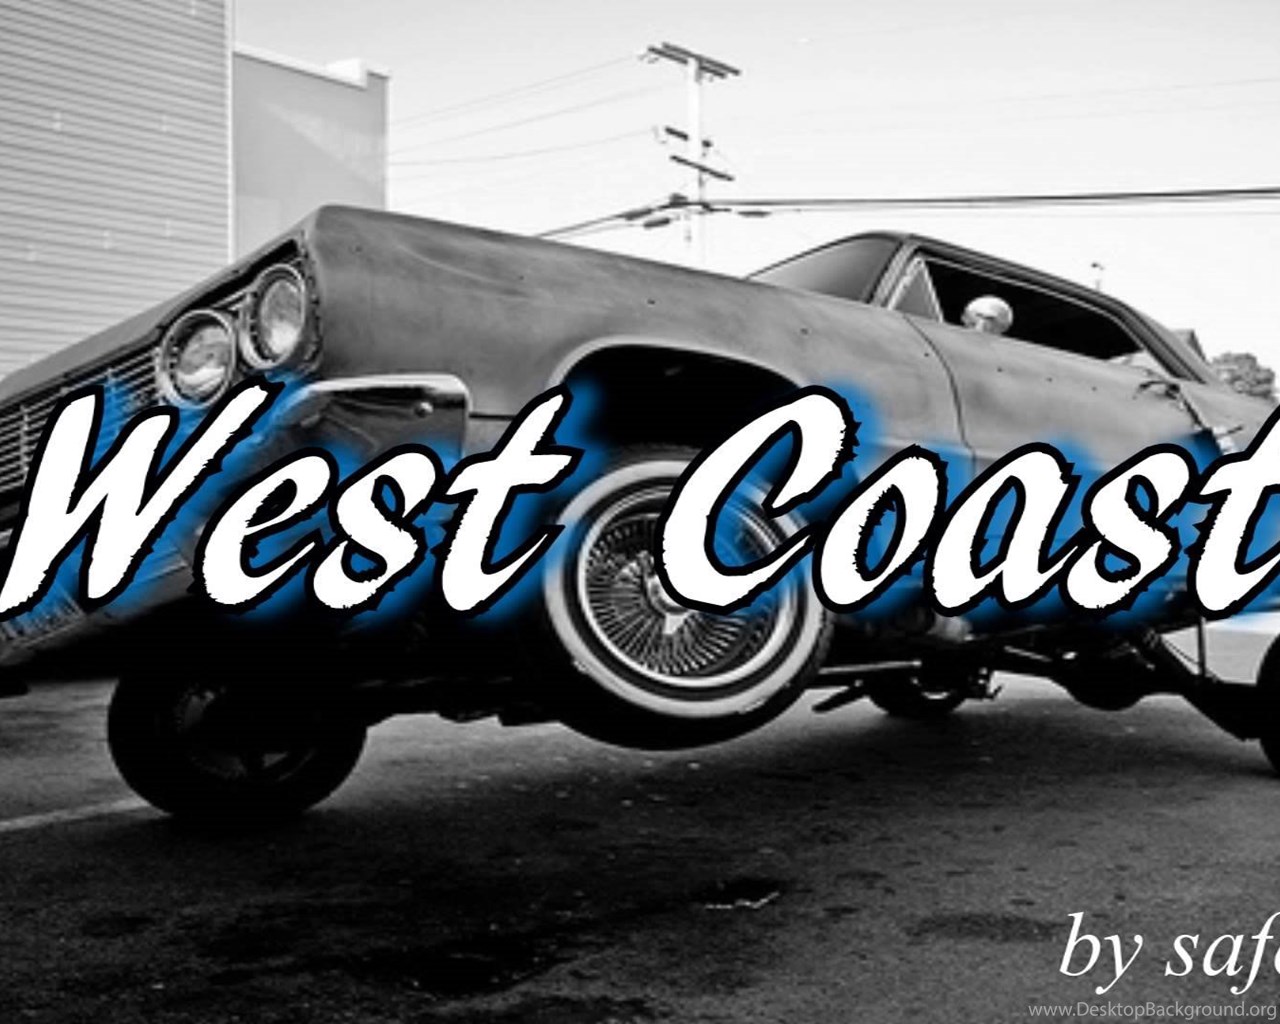 West coast classics gta 5 фото 67